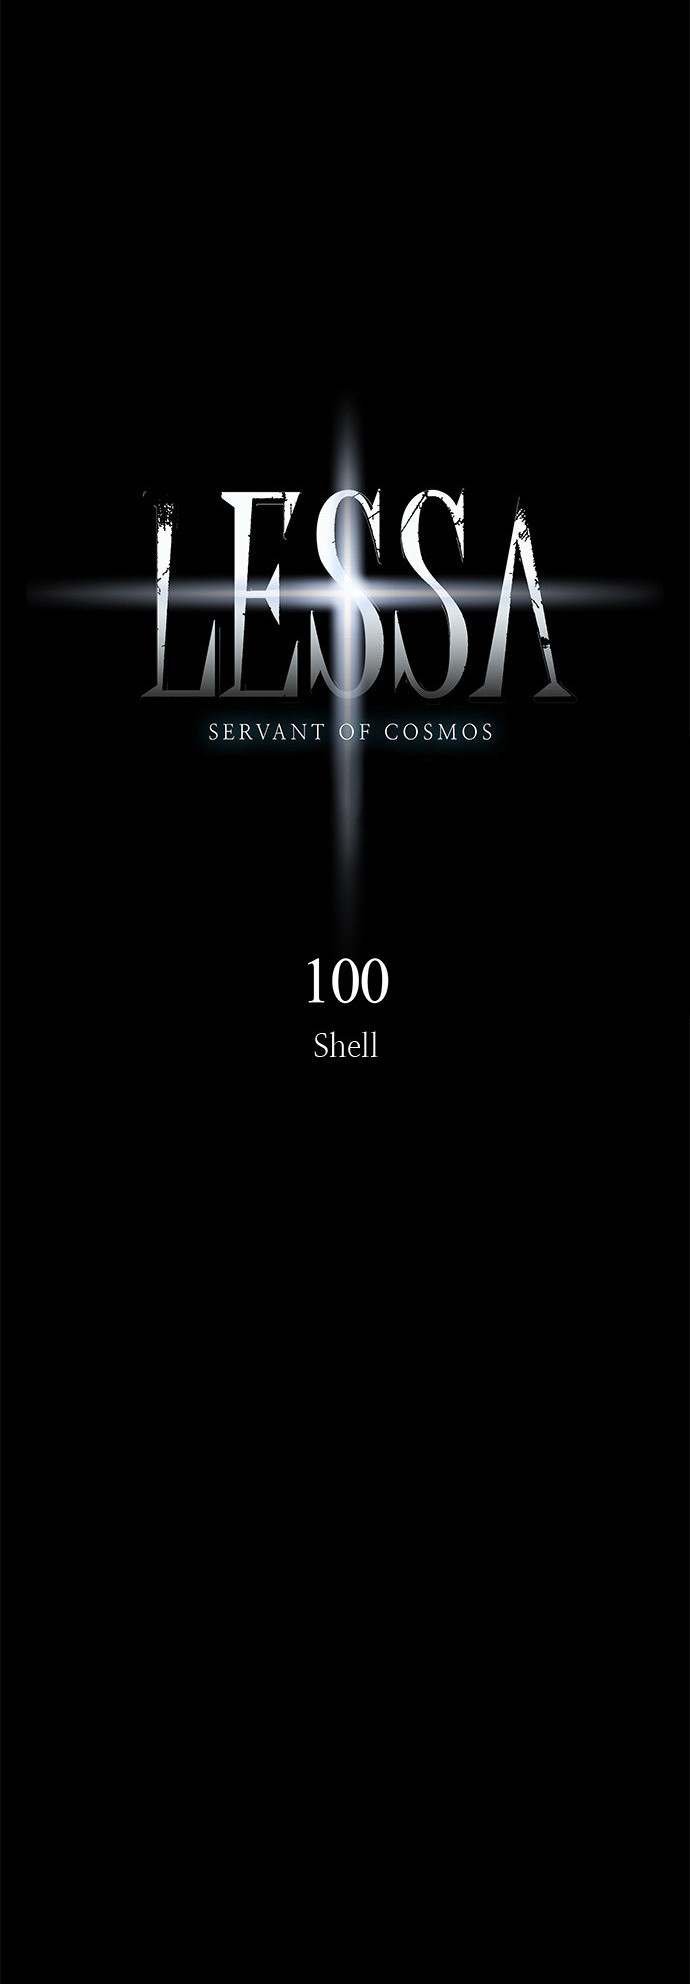 LESSA – Servant of Cosmos Chapter 100